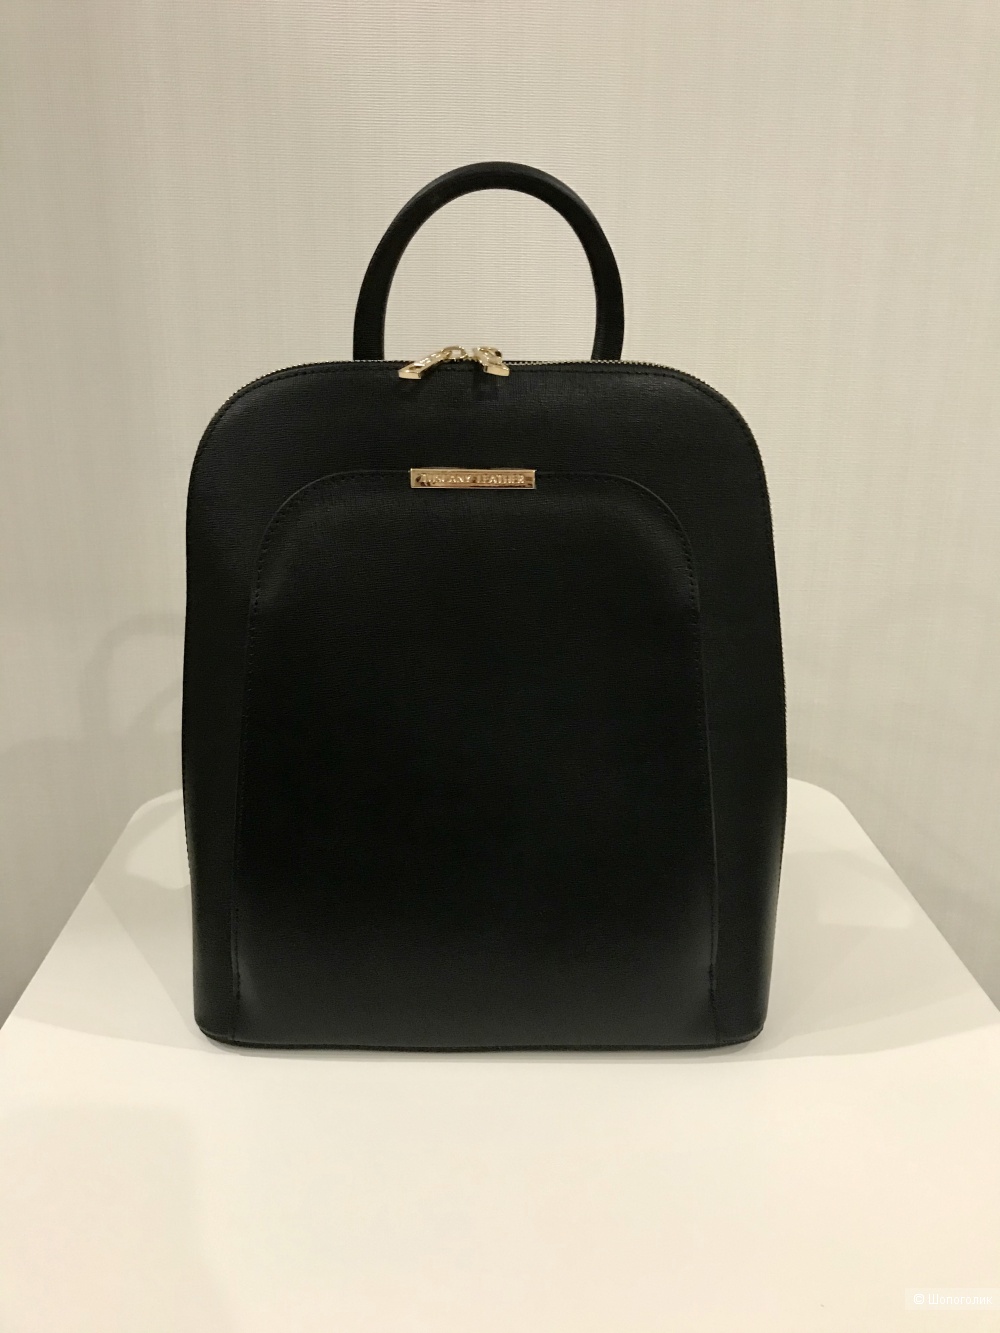 Рюкзак Tuscany leather, размер средний